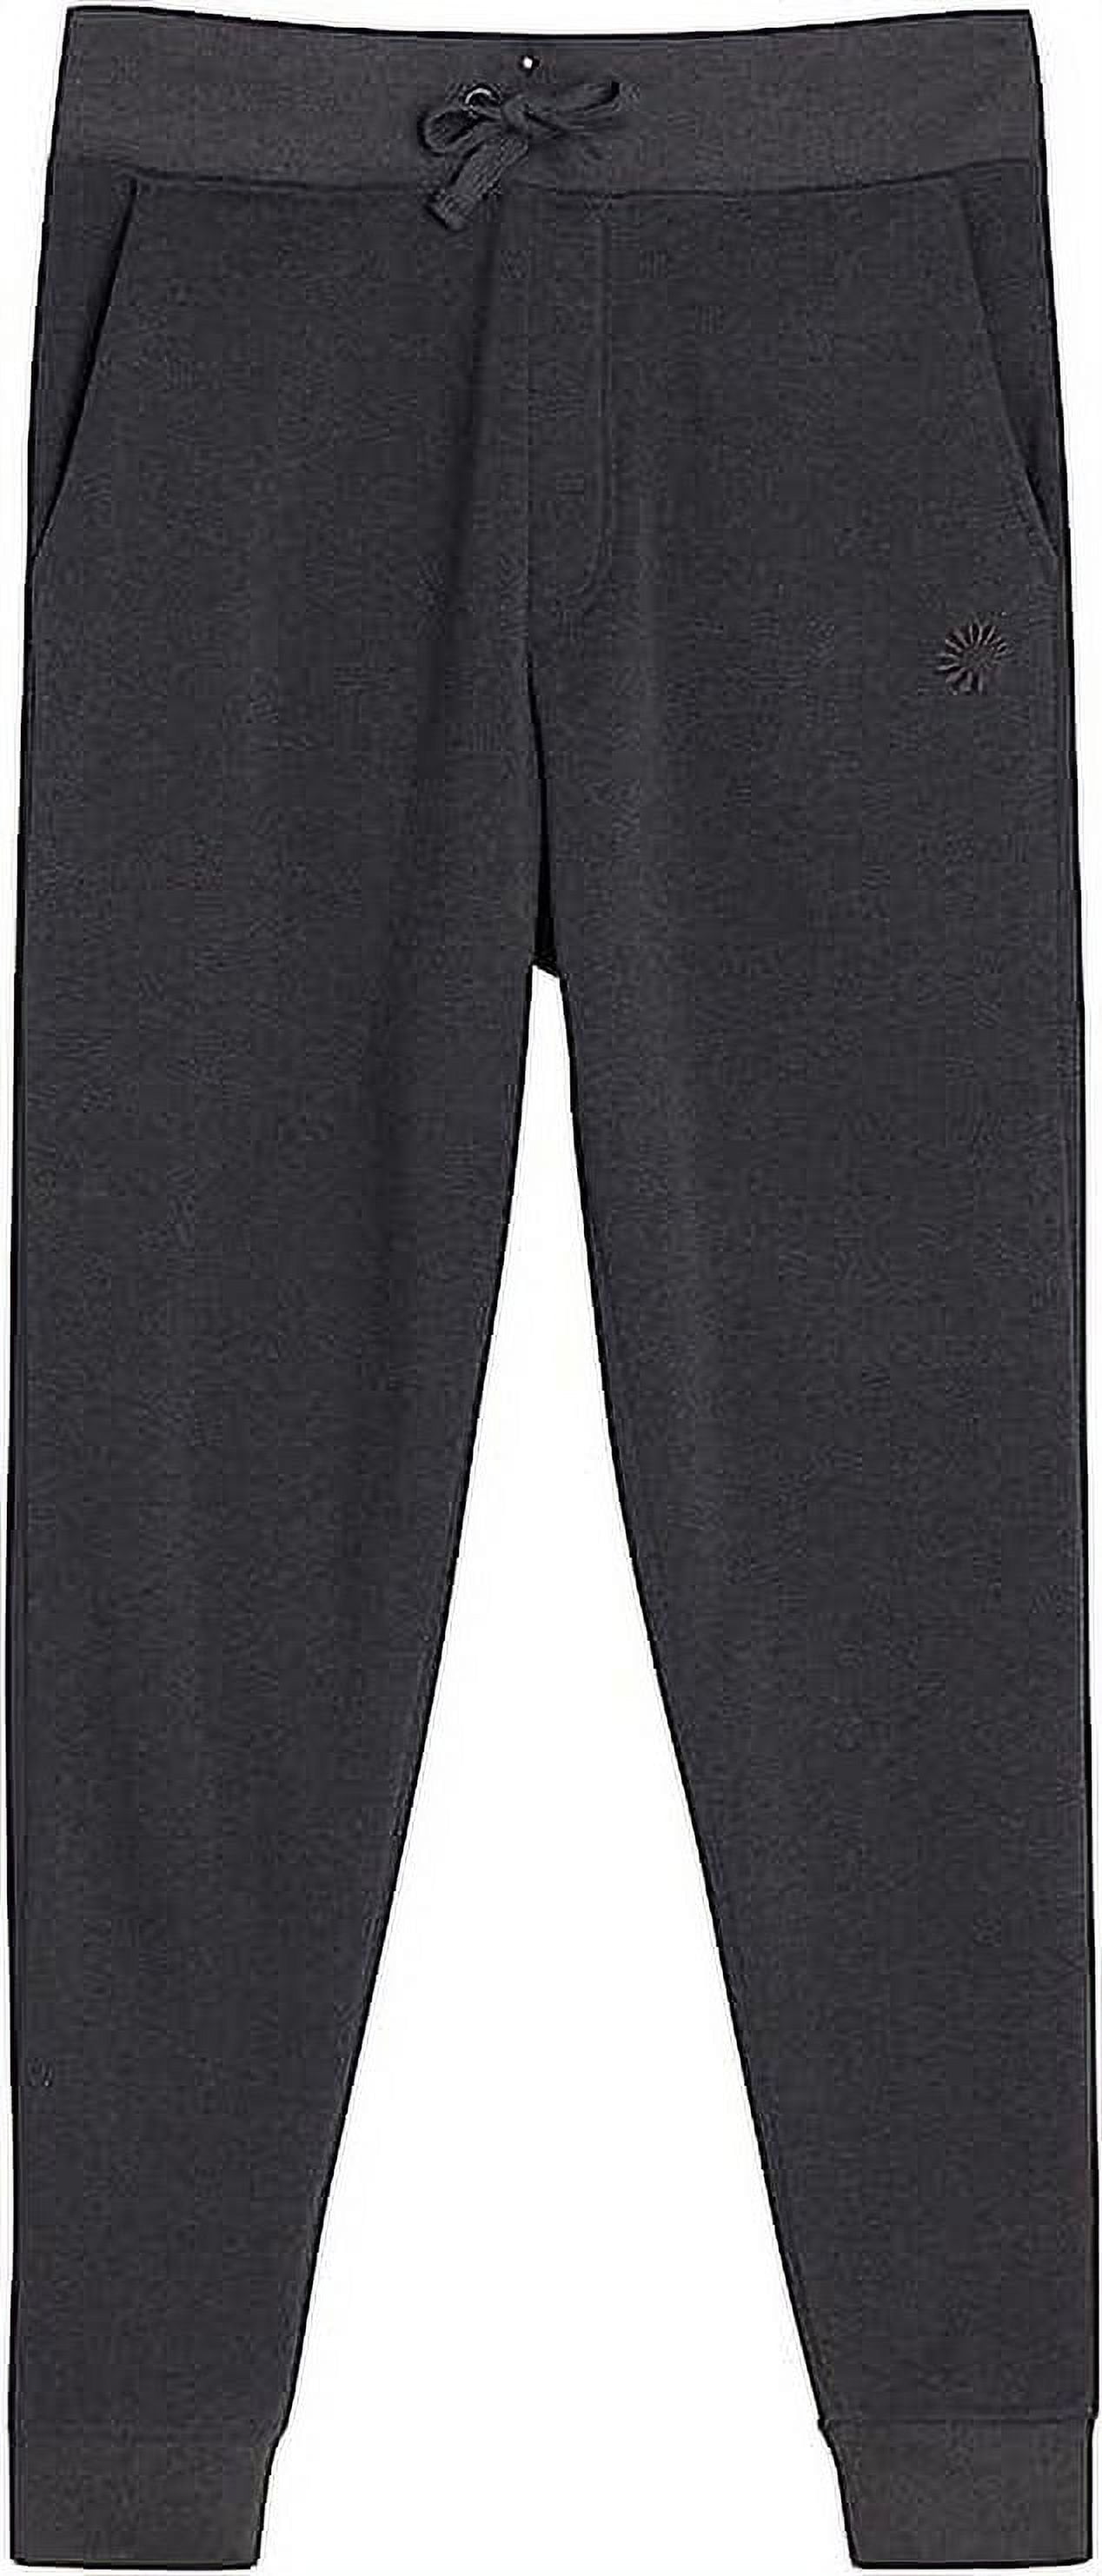 AKADEMIKS Men's Active Sweatpants – Fleece Jogger Pants with Pockets ...